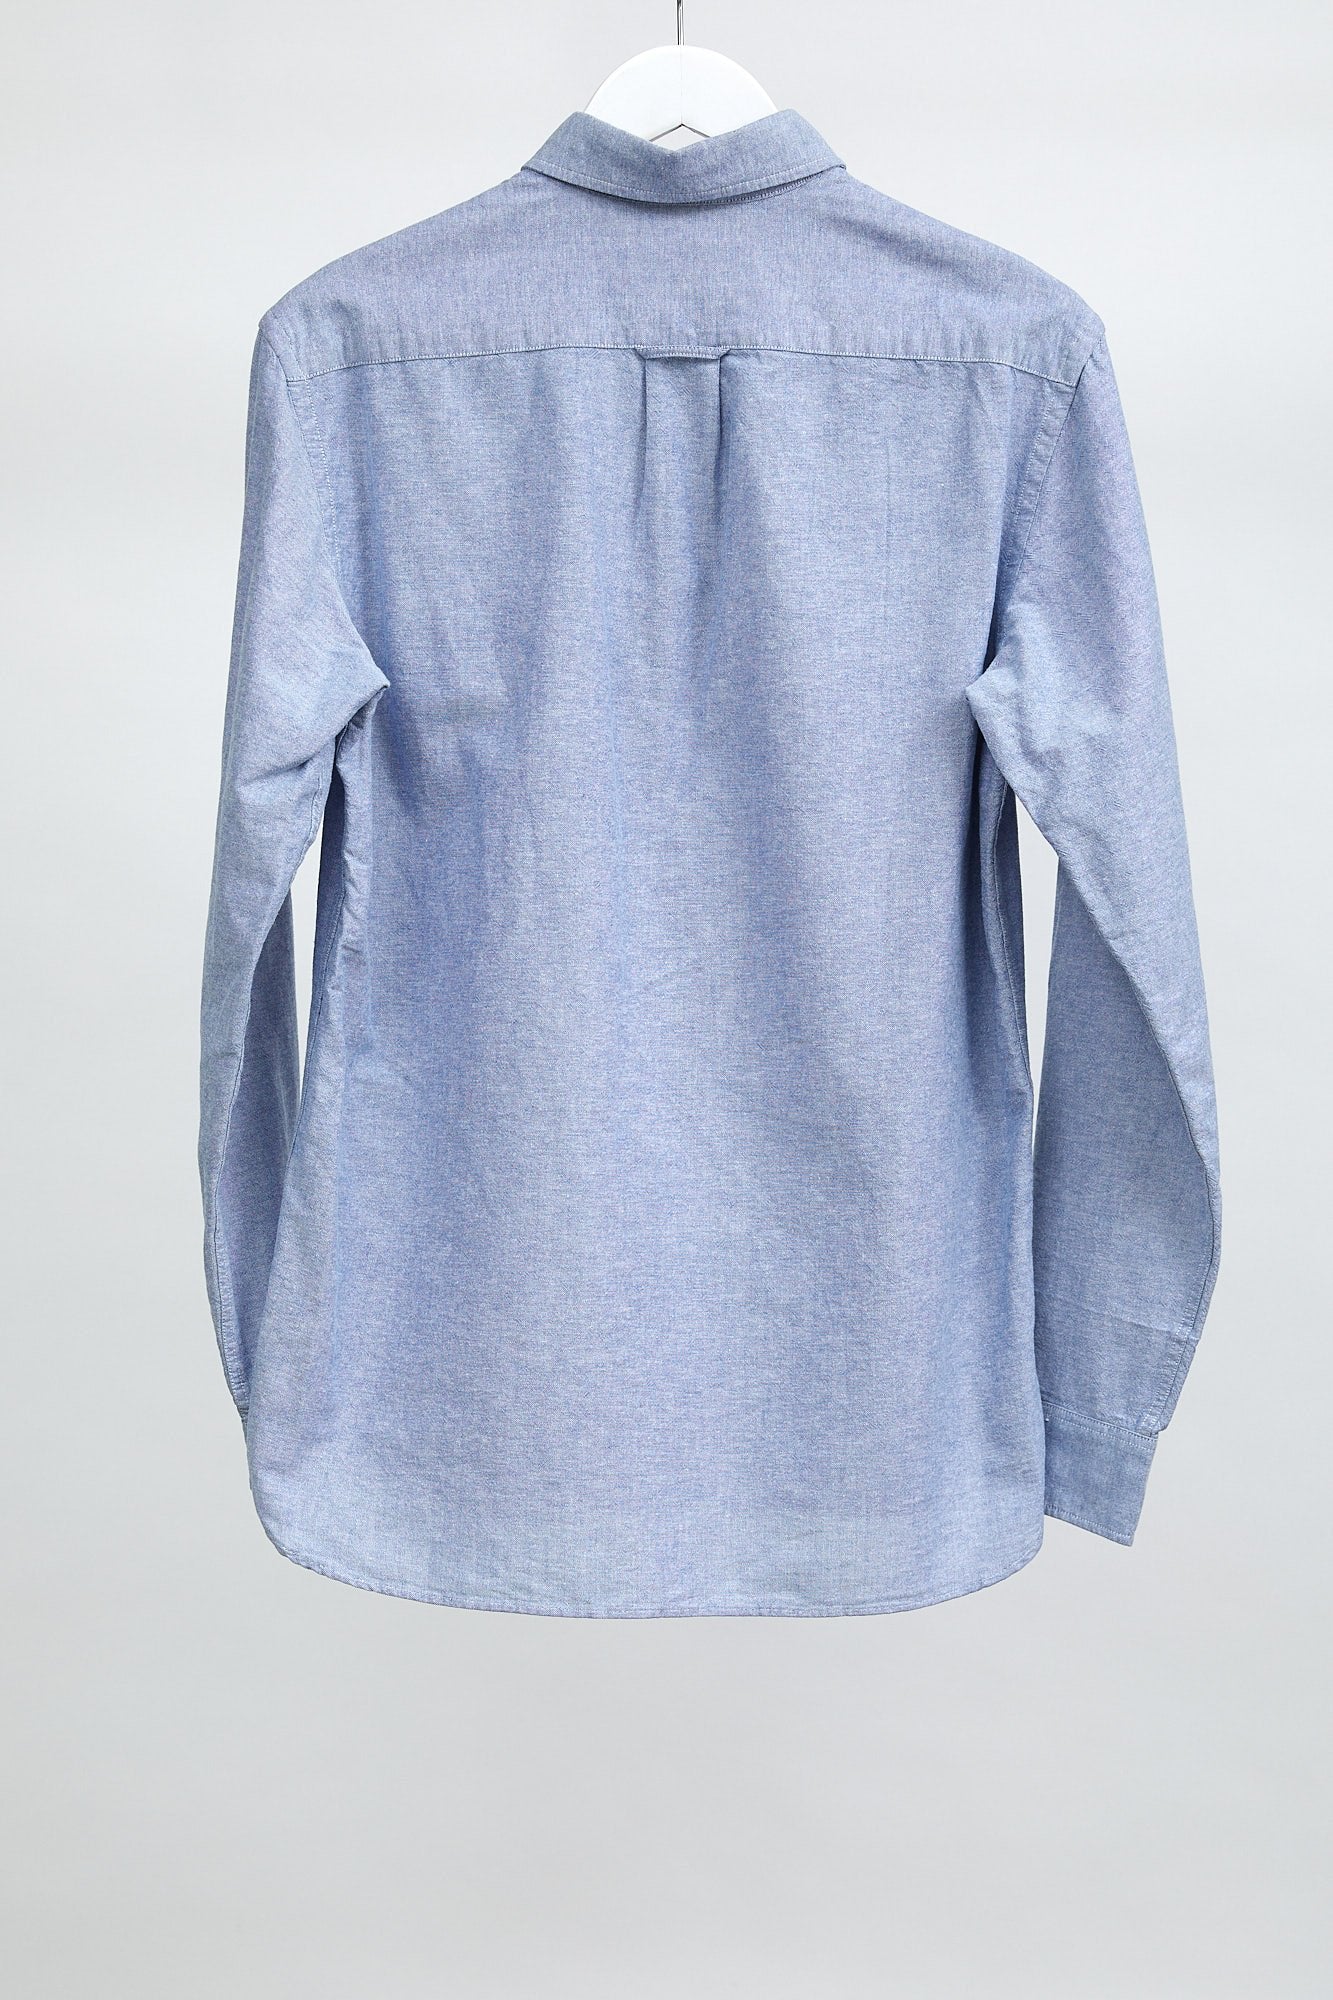 Mens H&M Light Blue Oxford Shirt: Size Small